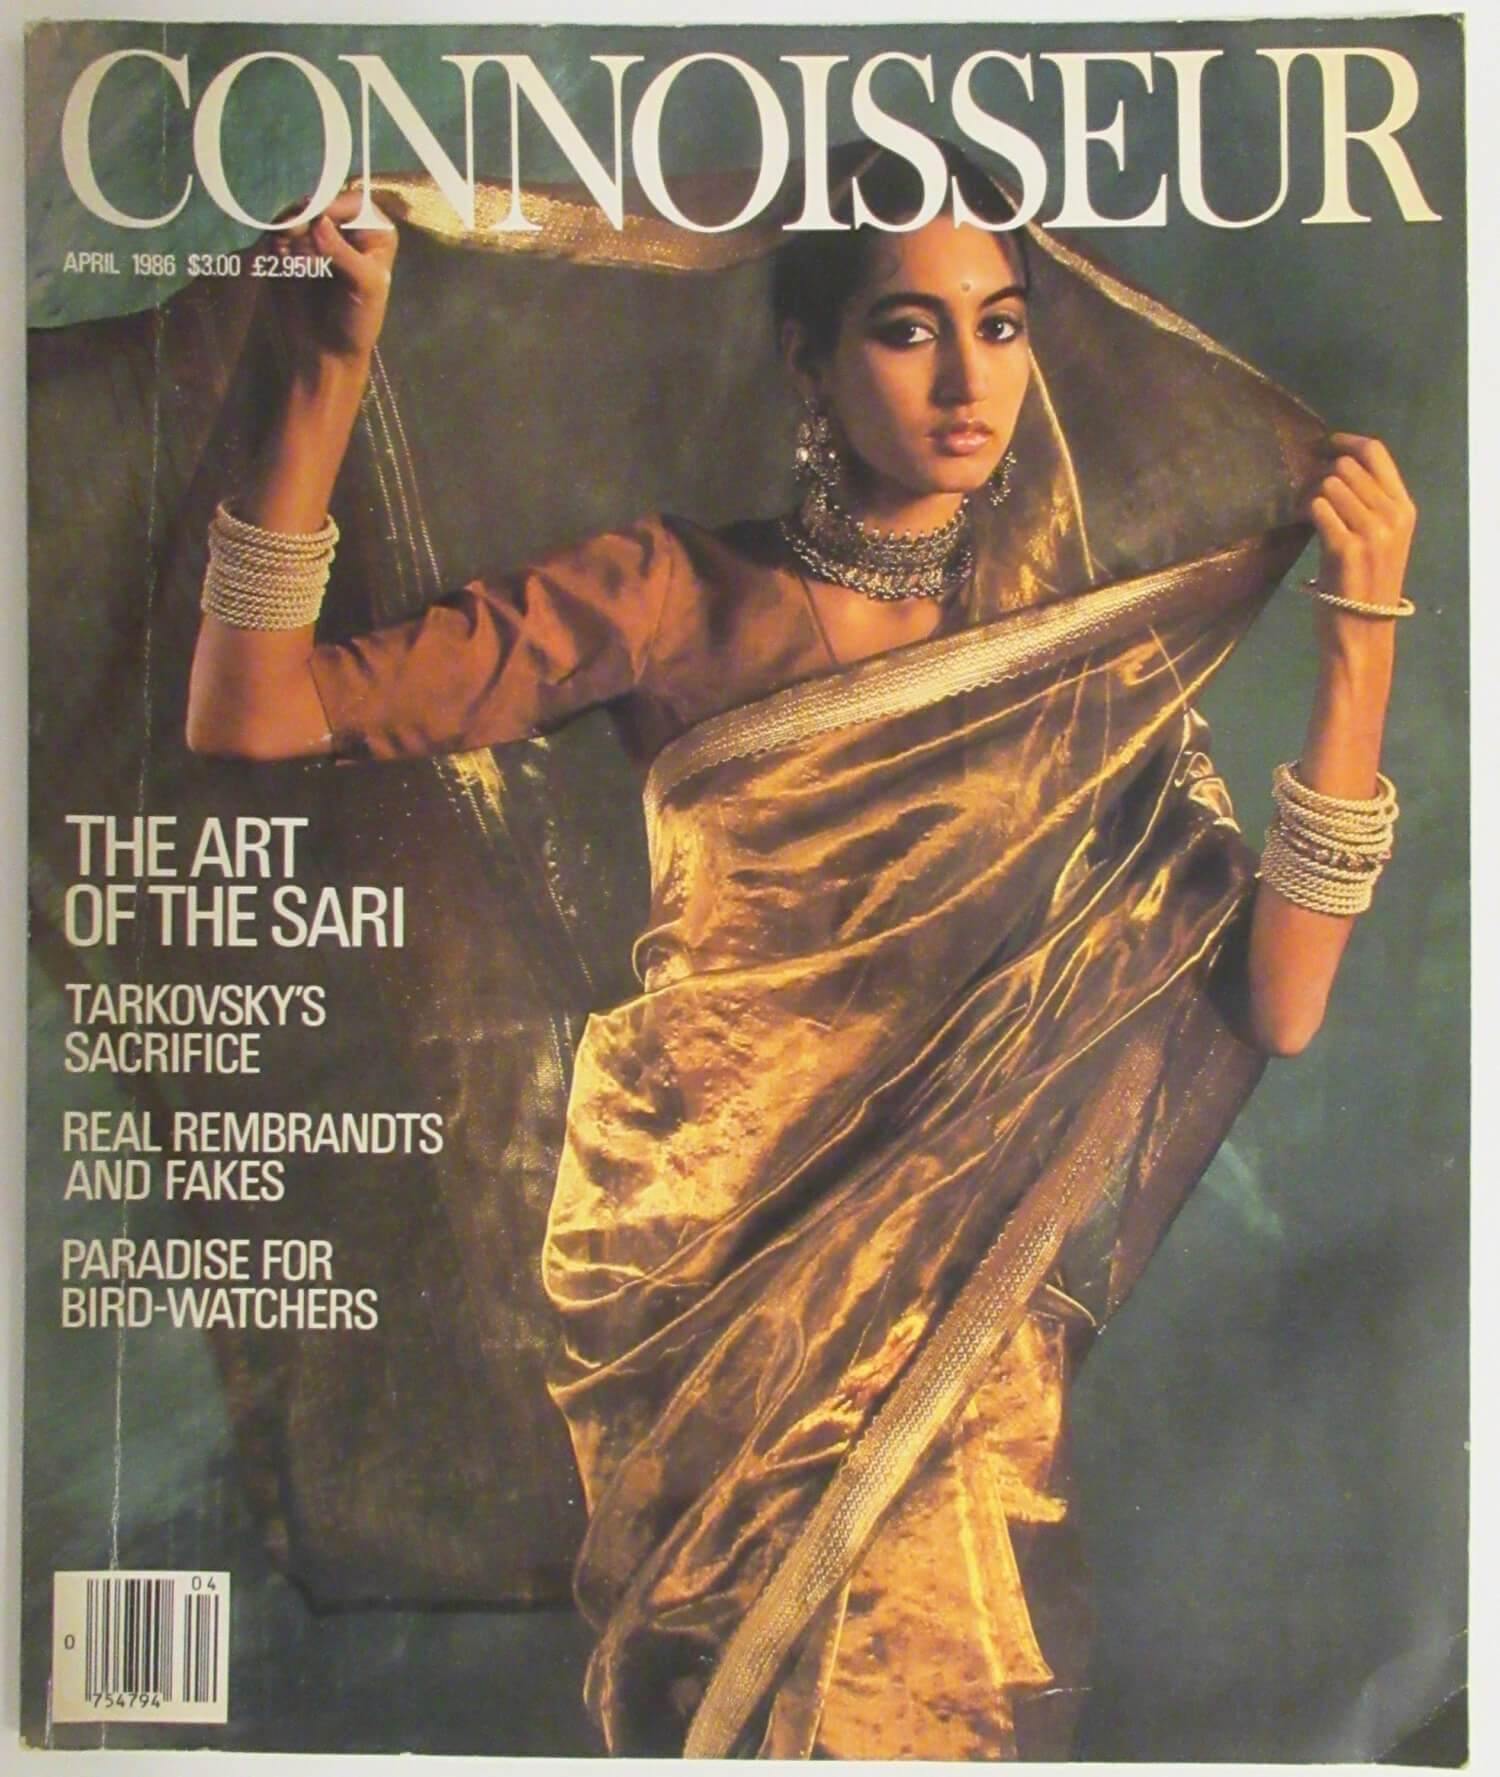 Vintage Connoisseur Magazine April 1986 The Art Of The Sari, Rembrandts - Lamoree’s Vintage